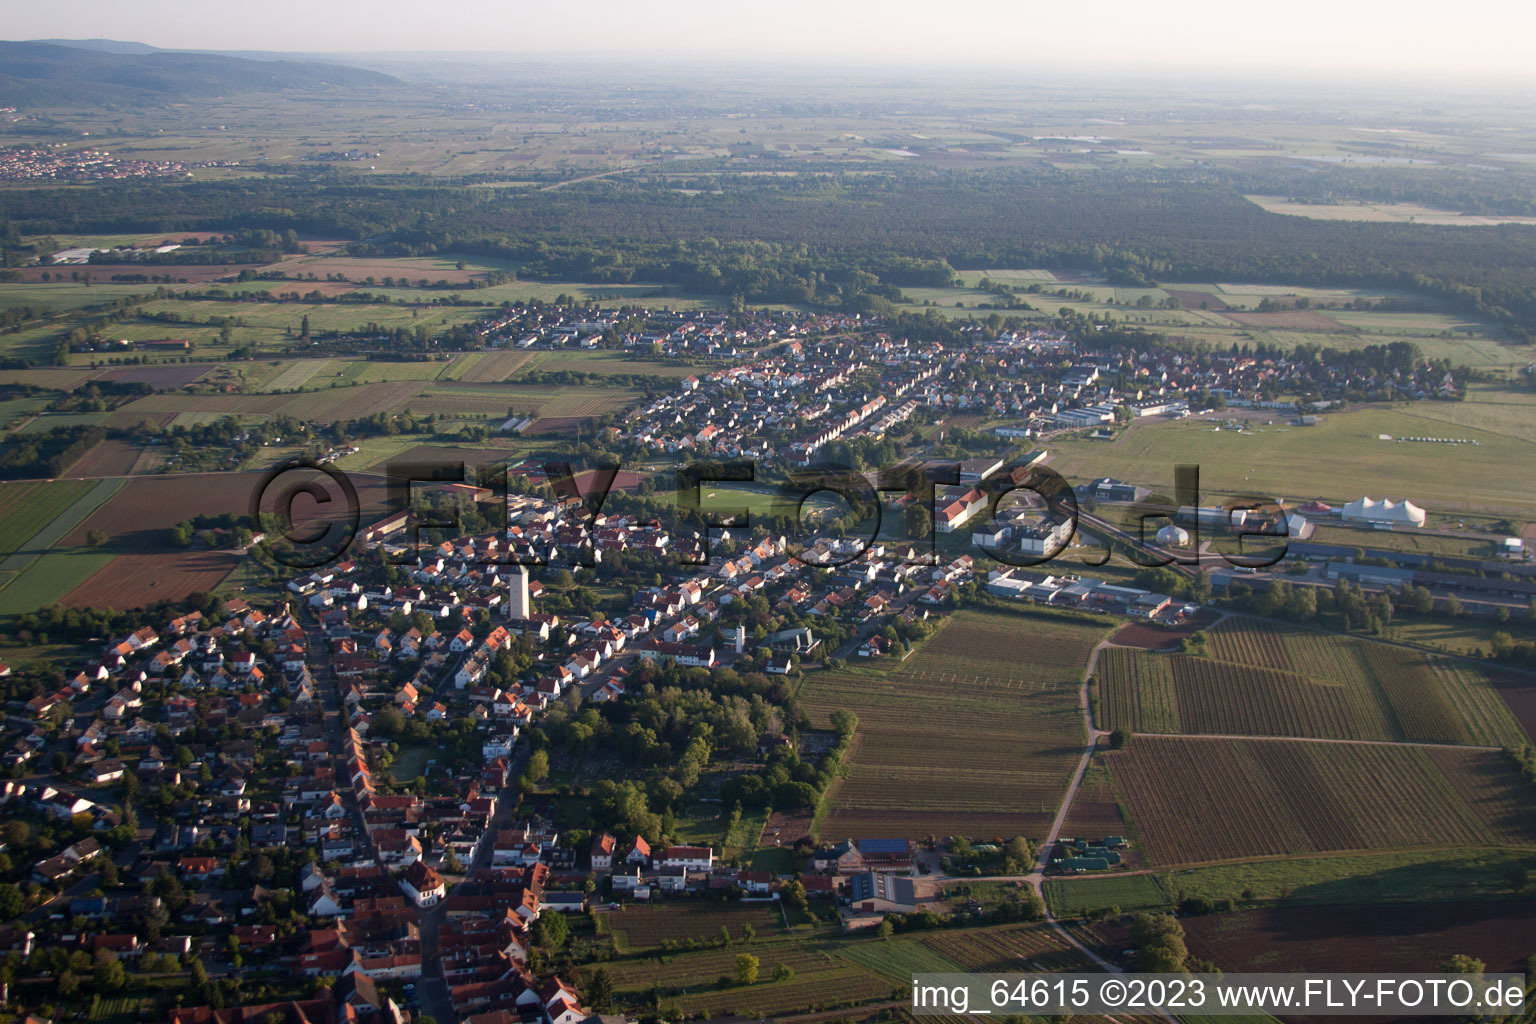 Aerial view of Goethestr in the district Lachen in Neustadt an der Weinstraße in the state Rhineland-Palatinate, Germany